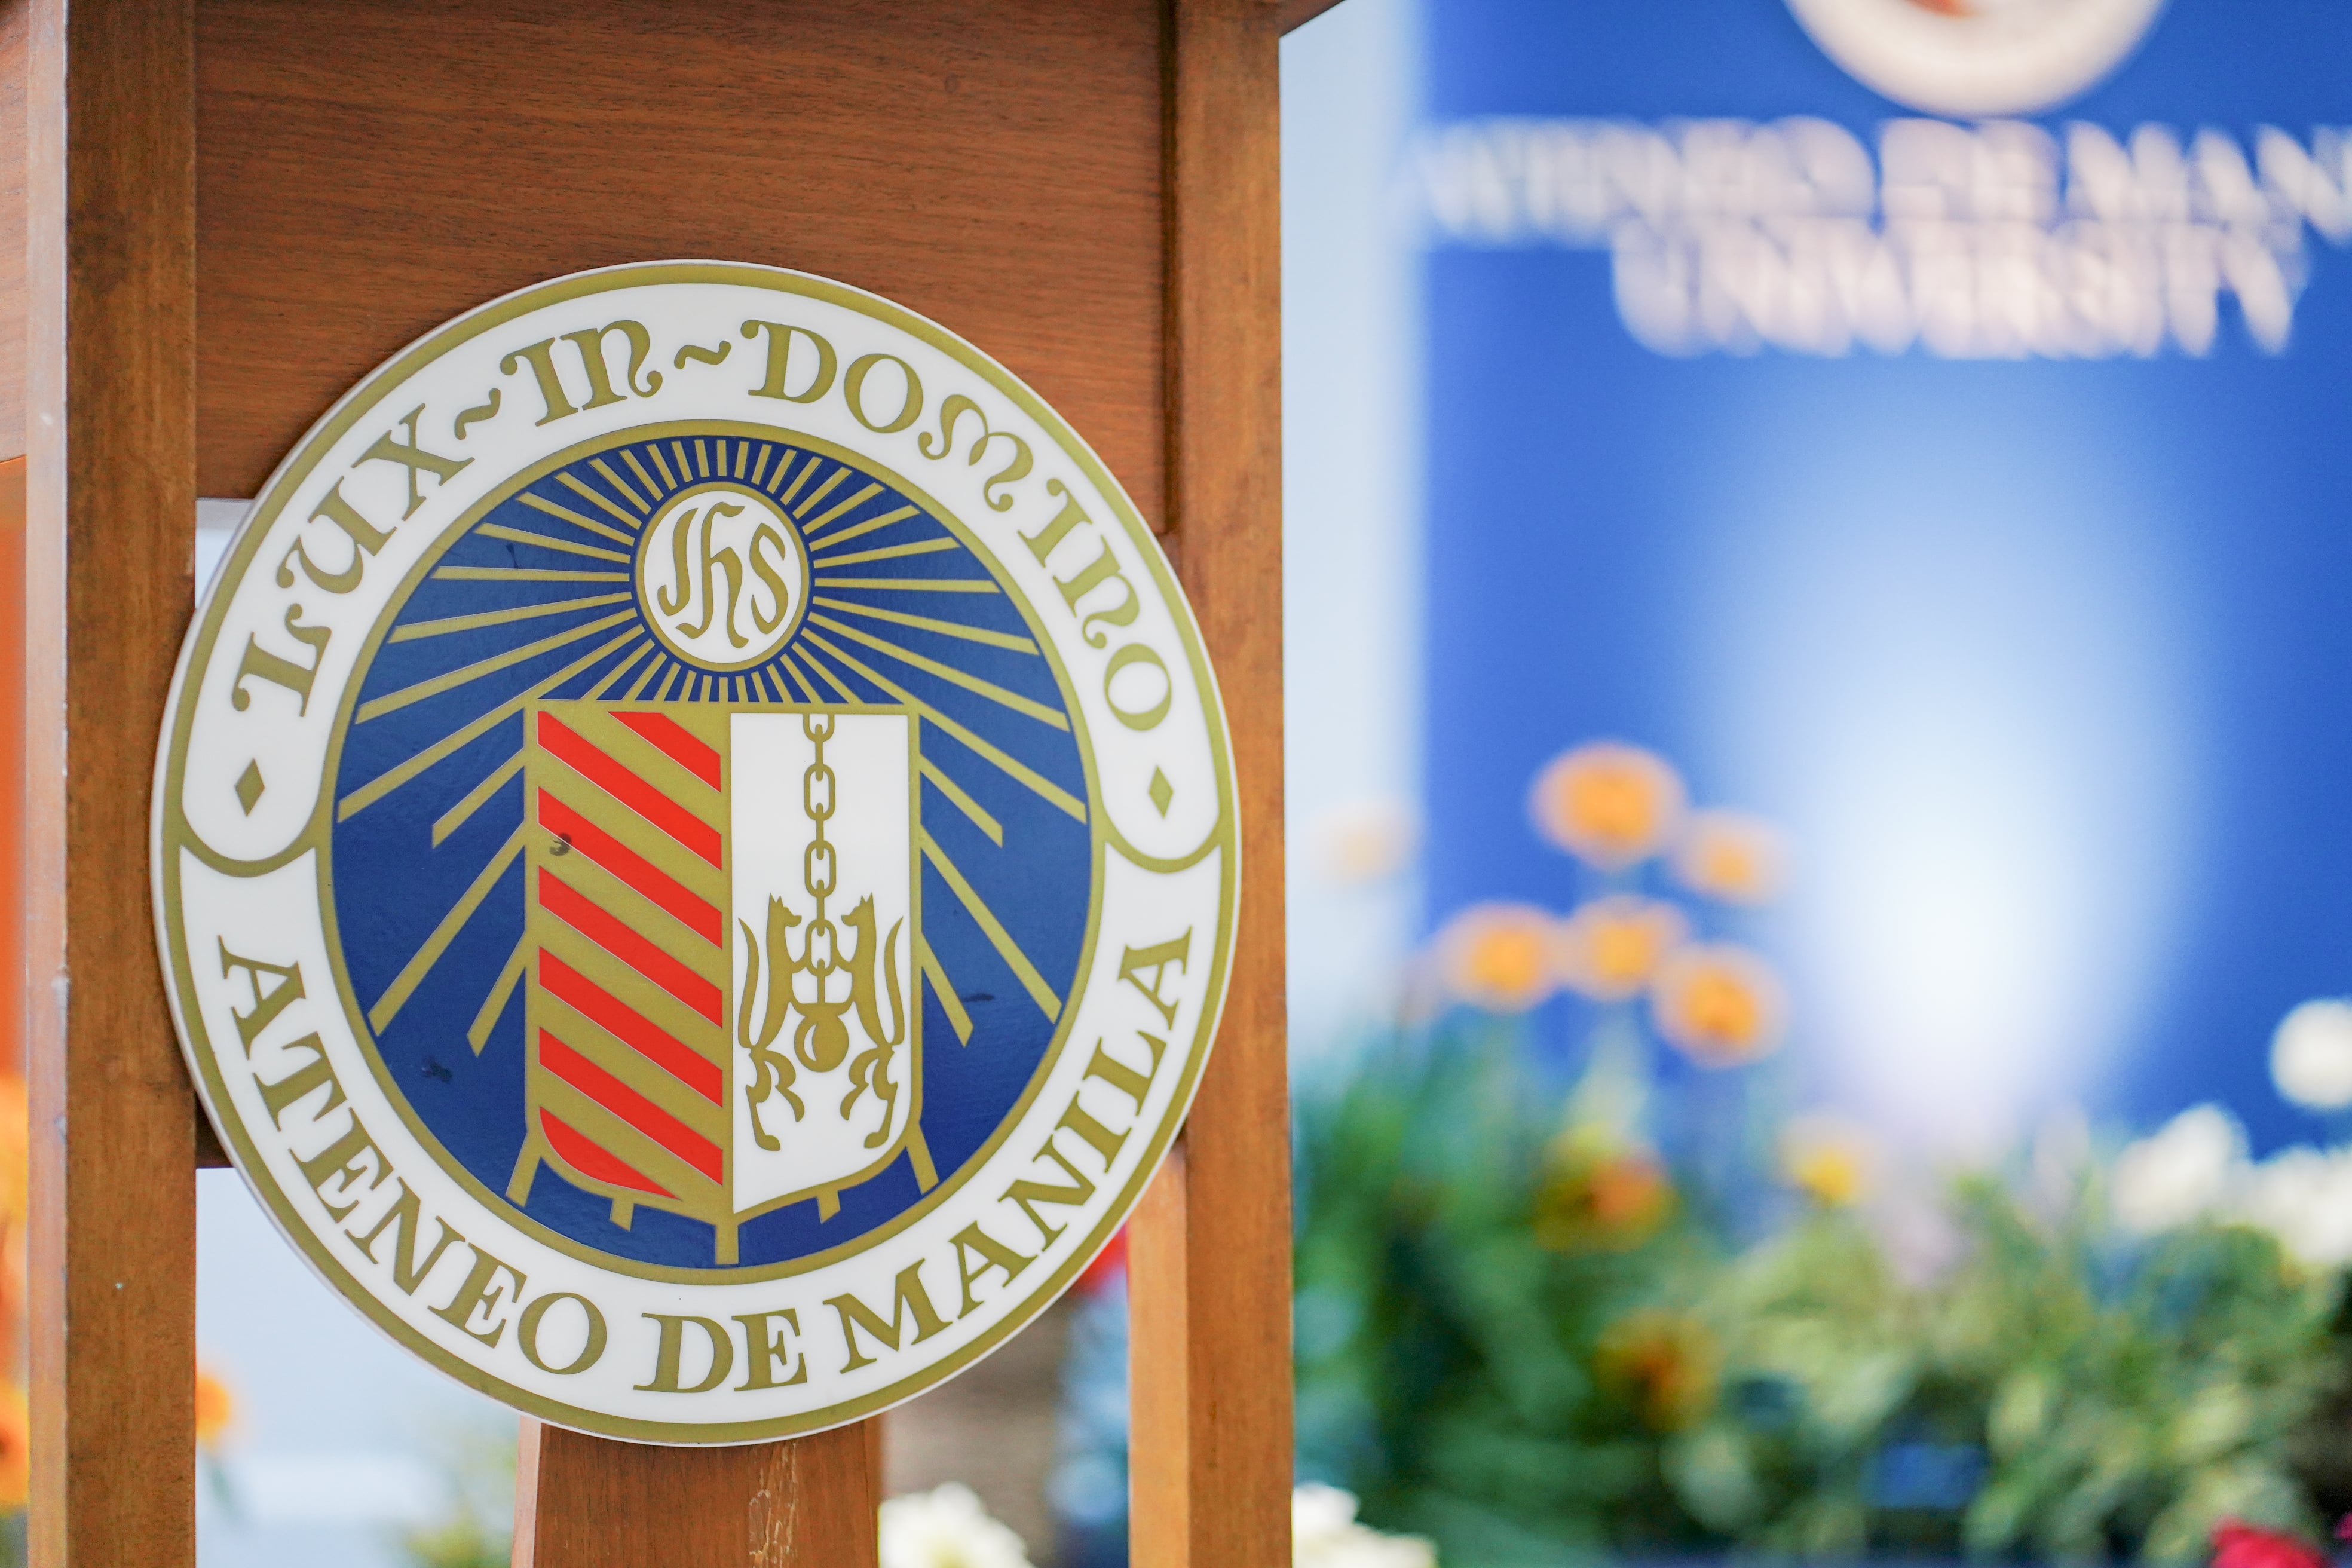 The seal of the Ateneo de Manila University